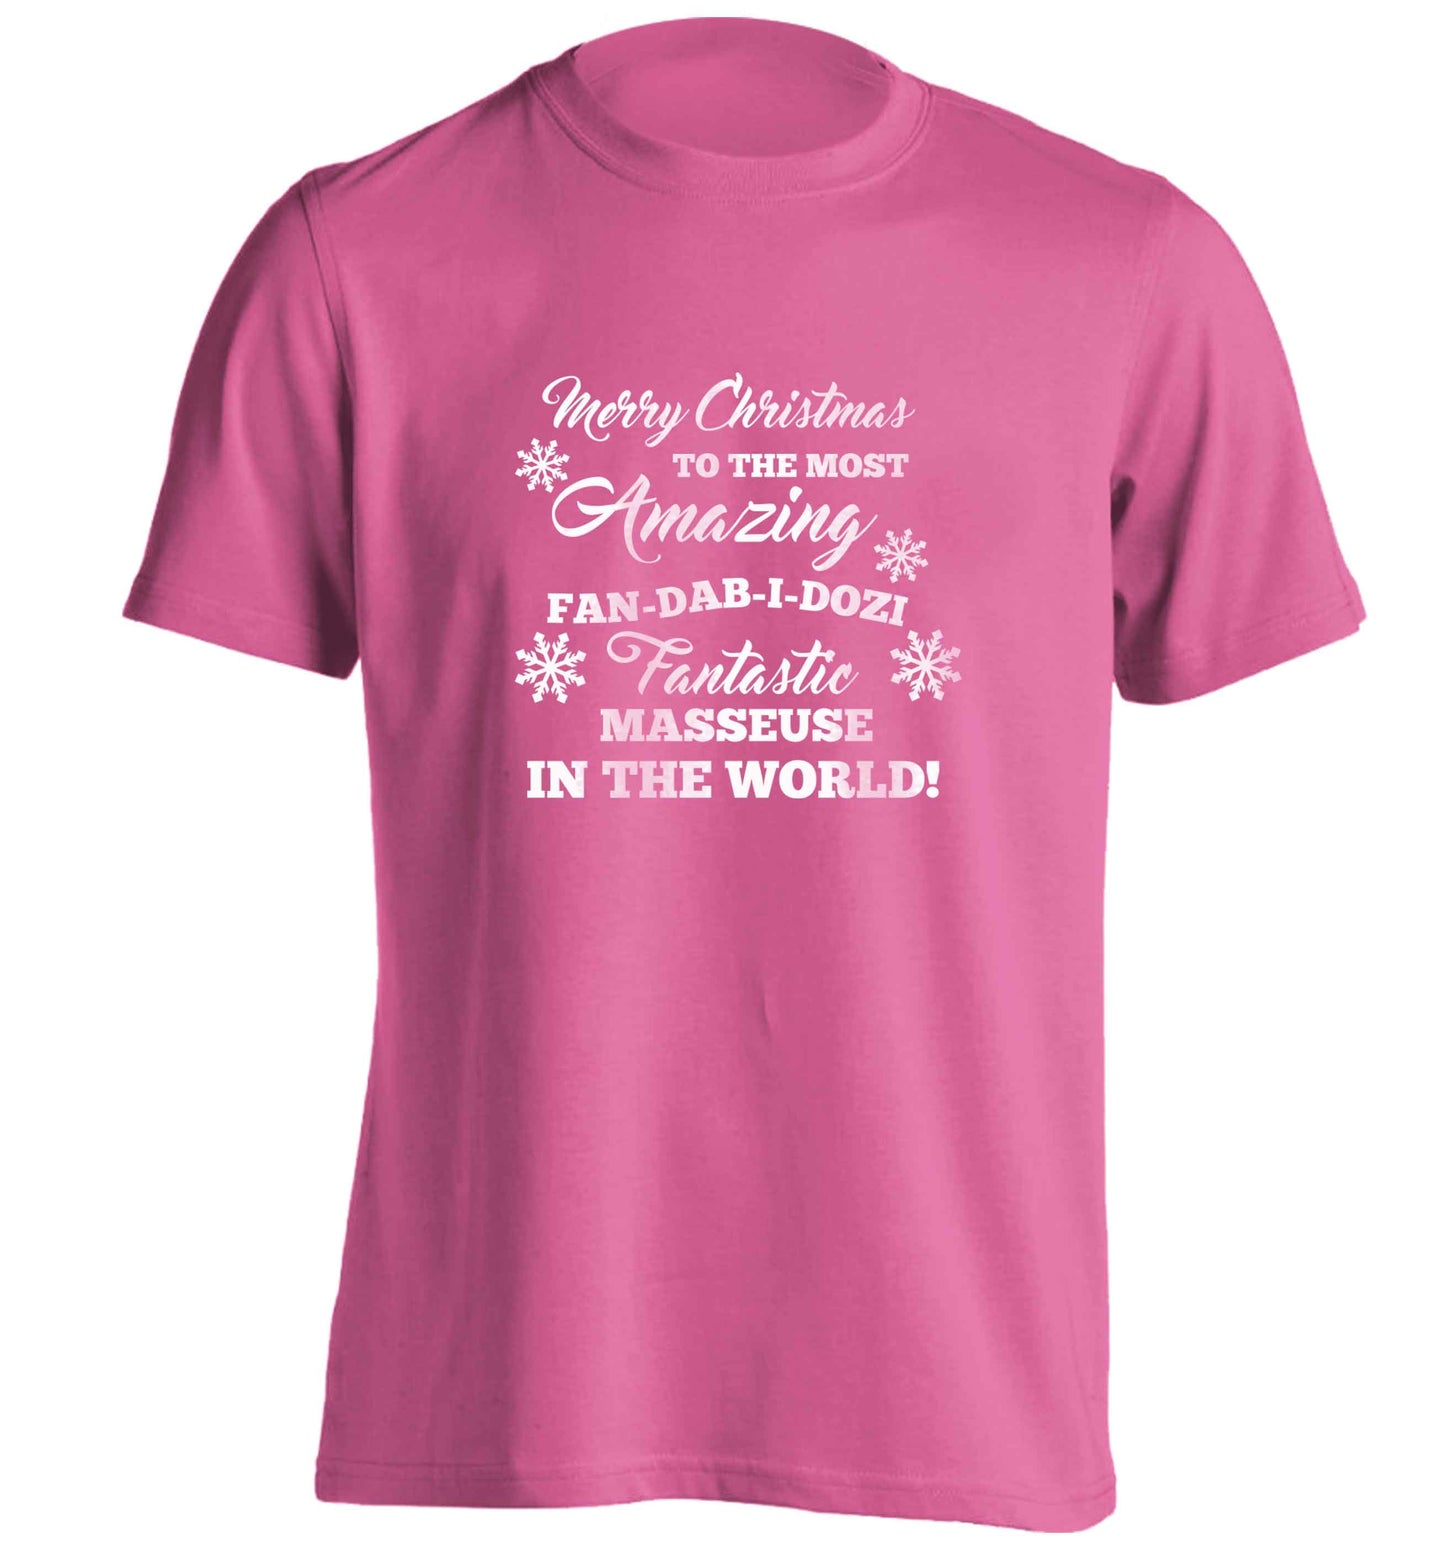 Merry Christmas to the most amazing fan-dab-i-dozi fantasic masseuse in the world adults unisex pink Tshirt 2XL